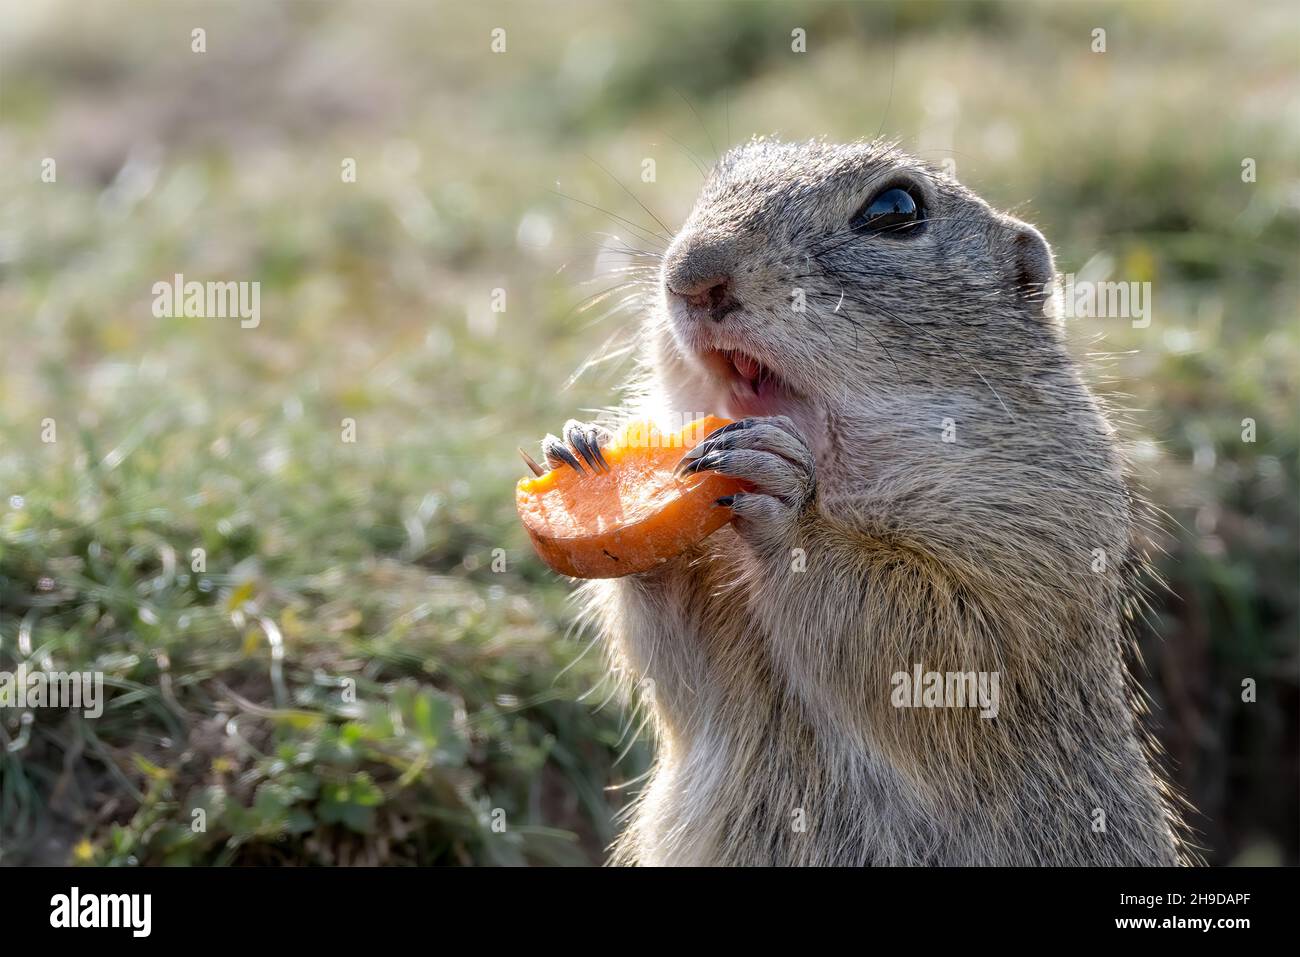 Groundhog siede su un prato verde e mangia una carota. Foto Stock